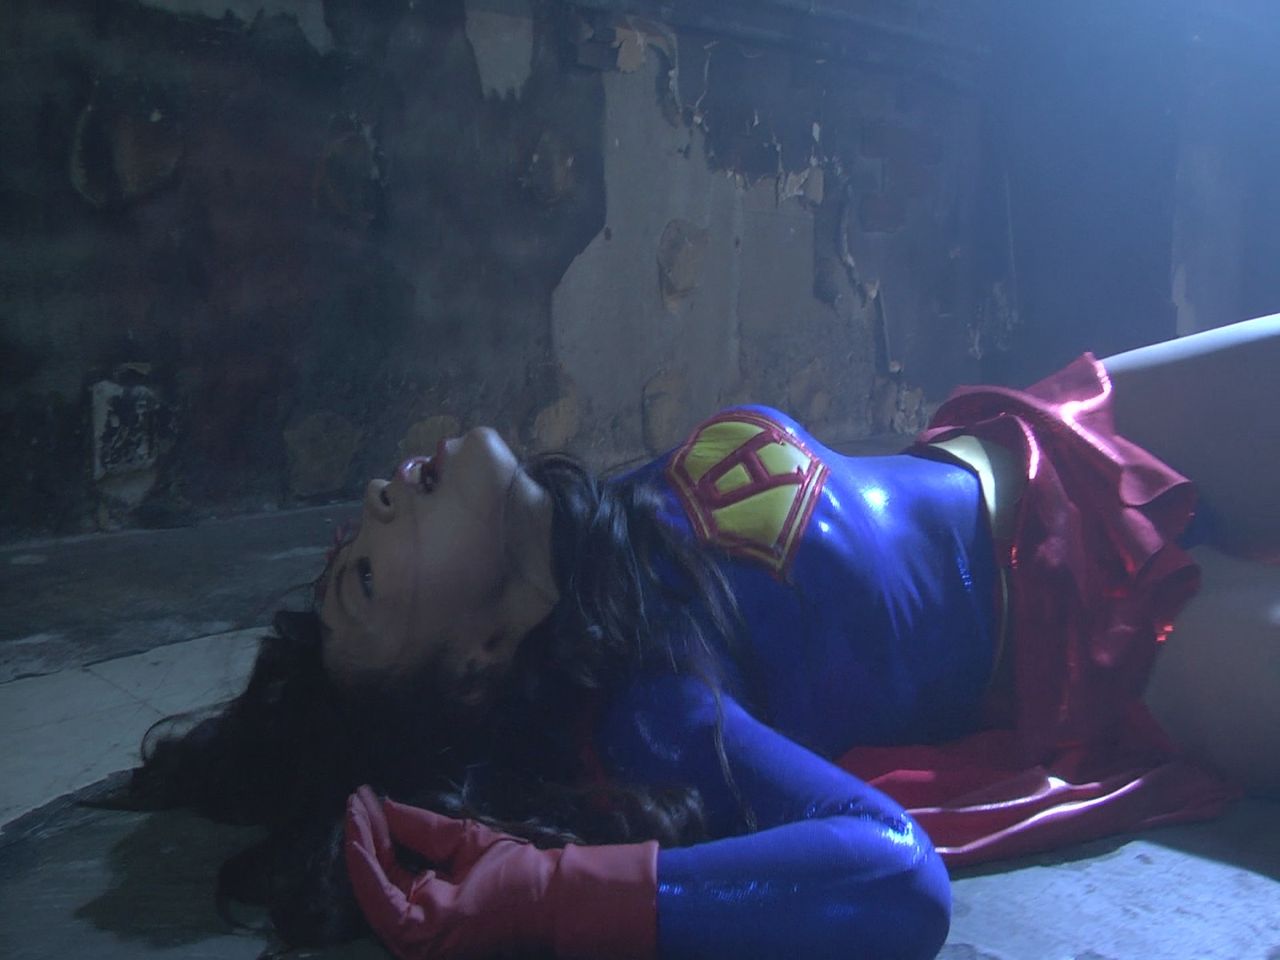 Supergirl in peril scene part 1.